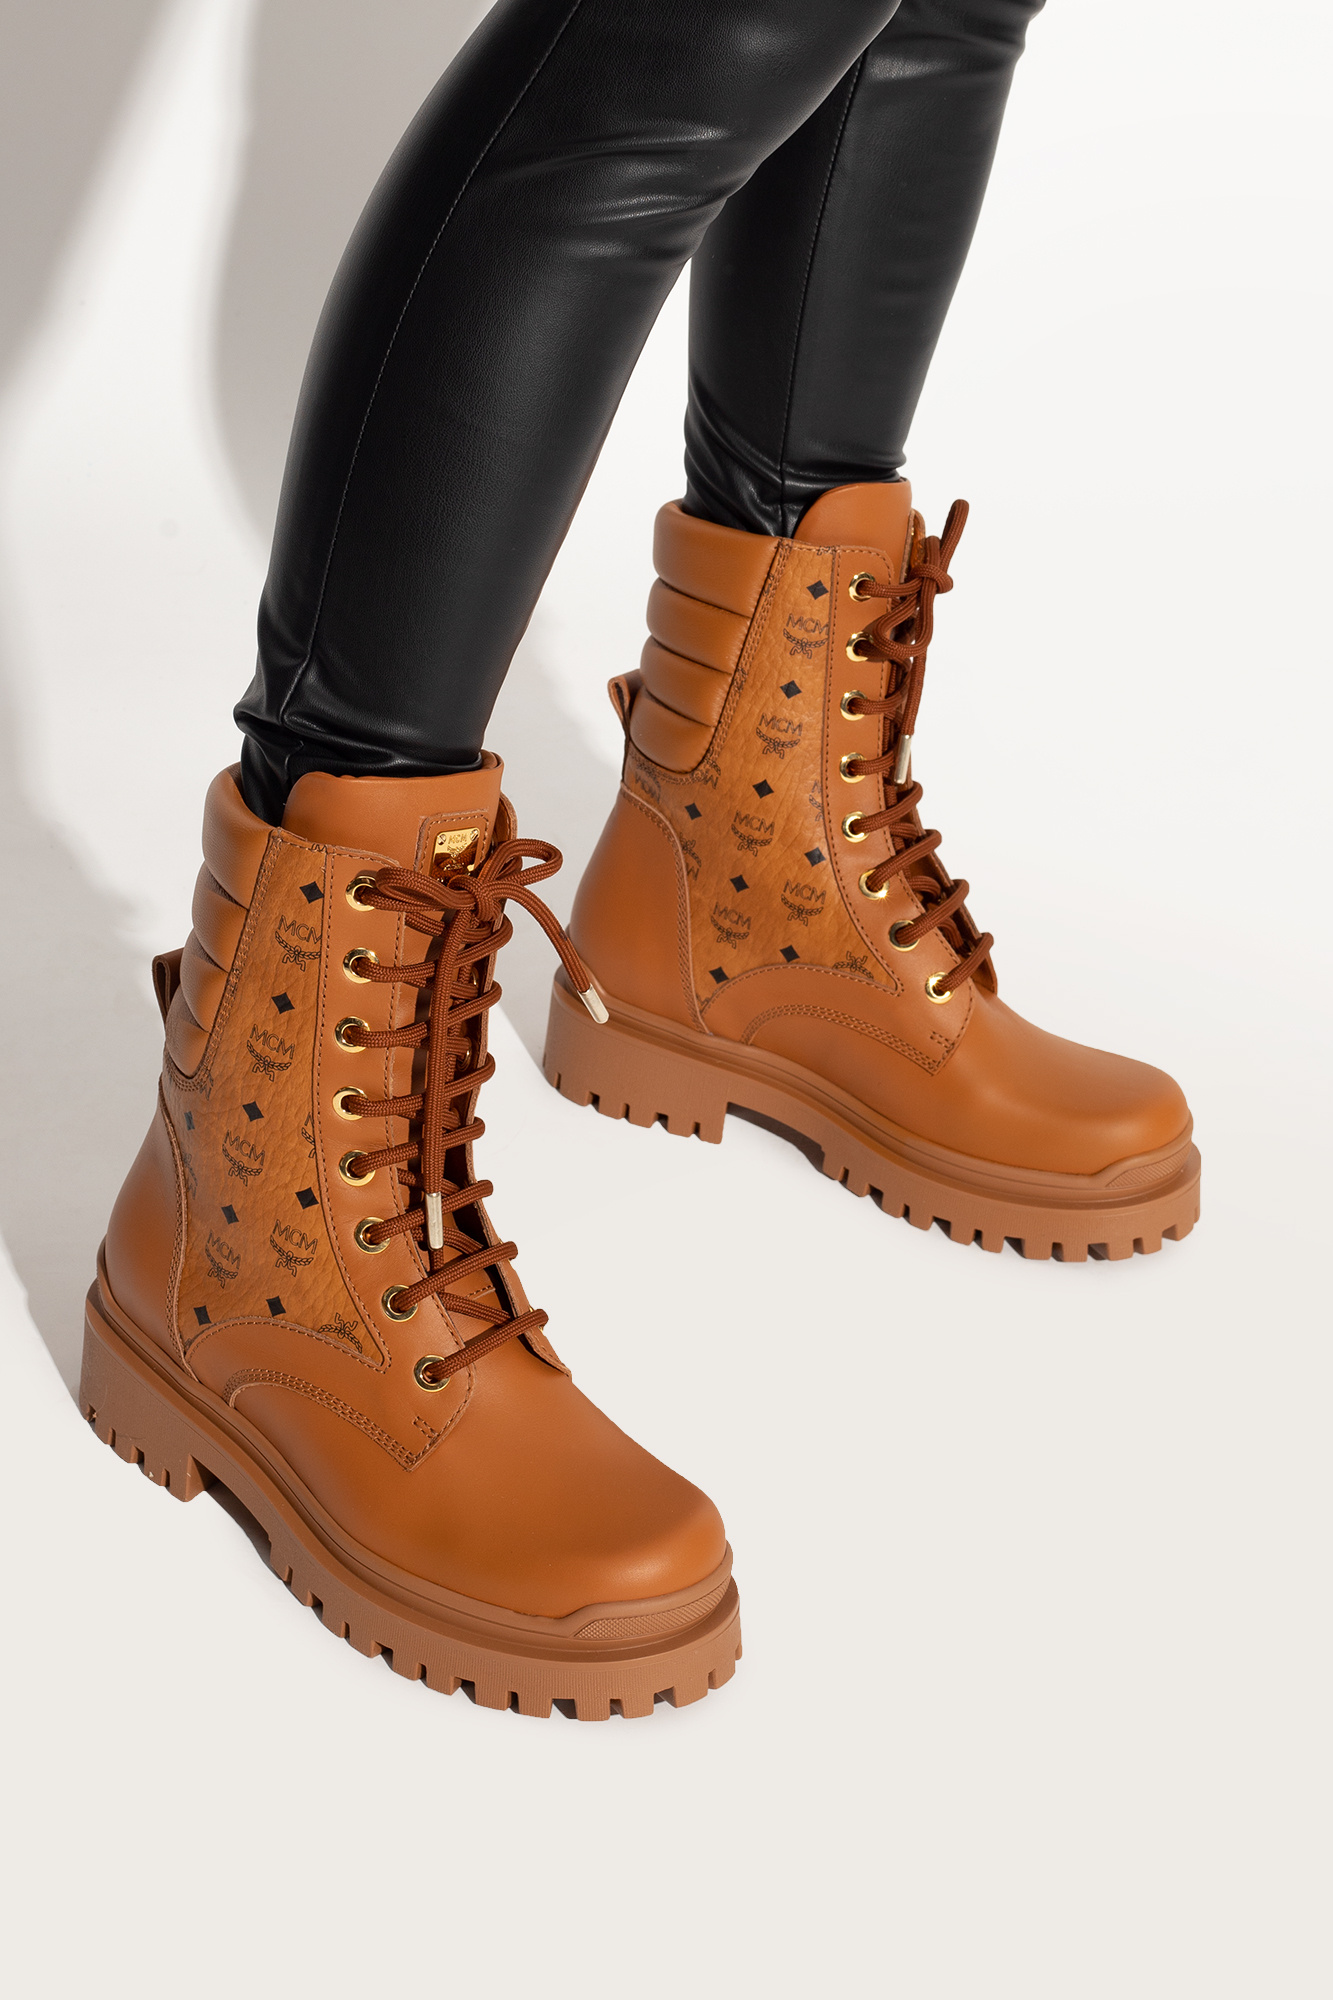 Mcm Women's Visetos Monogram Combat Boots - Cognac - Size 6